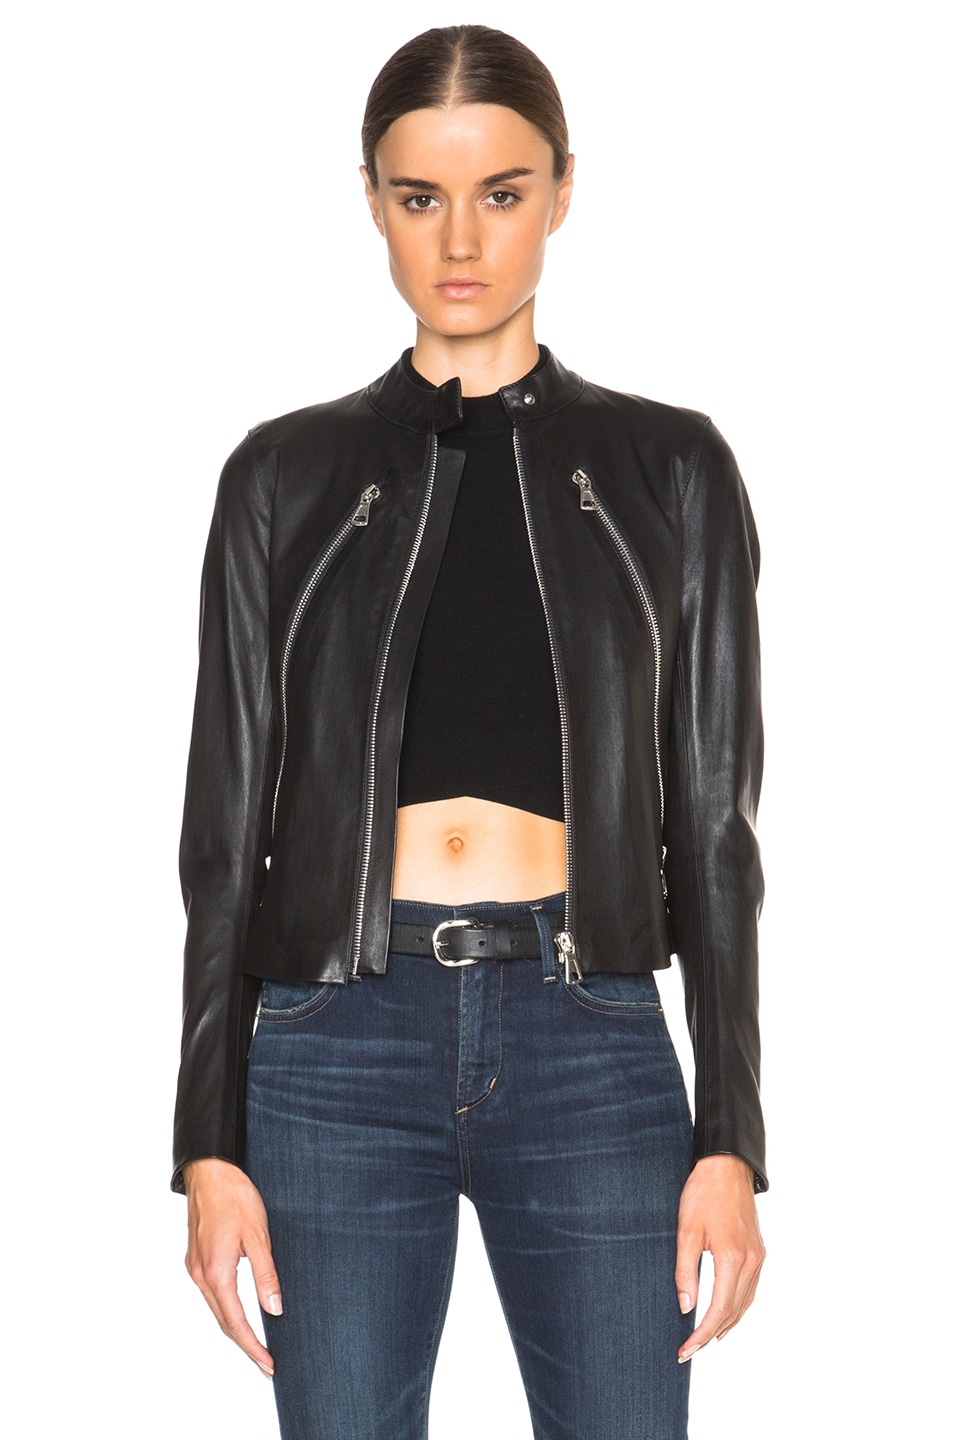 Maison Margiela Stretch Leather Jacket in Black | FWRD